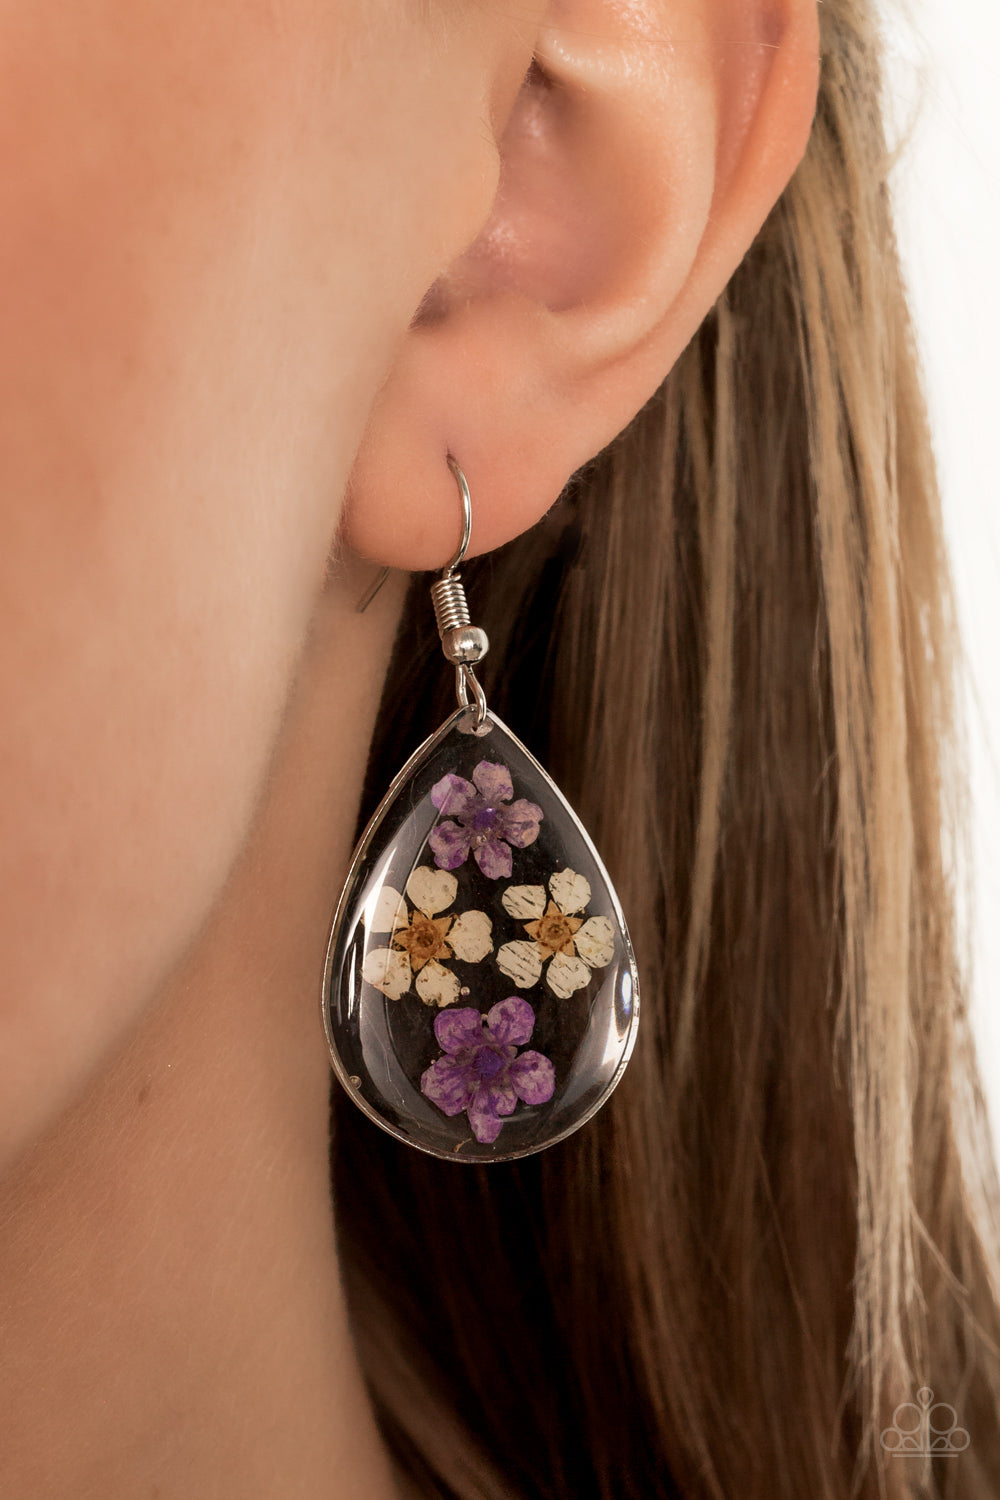 Perennial Prairie - Multi Yellow and Purple Flower Teardrop Earrings - Paparazzi Accessories